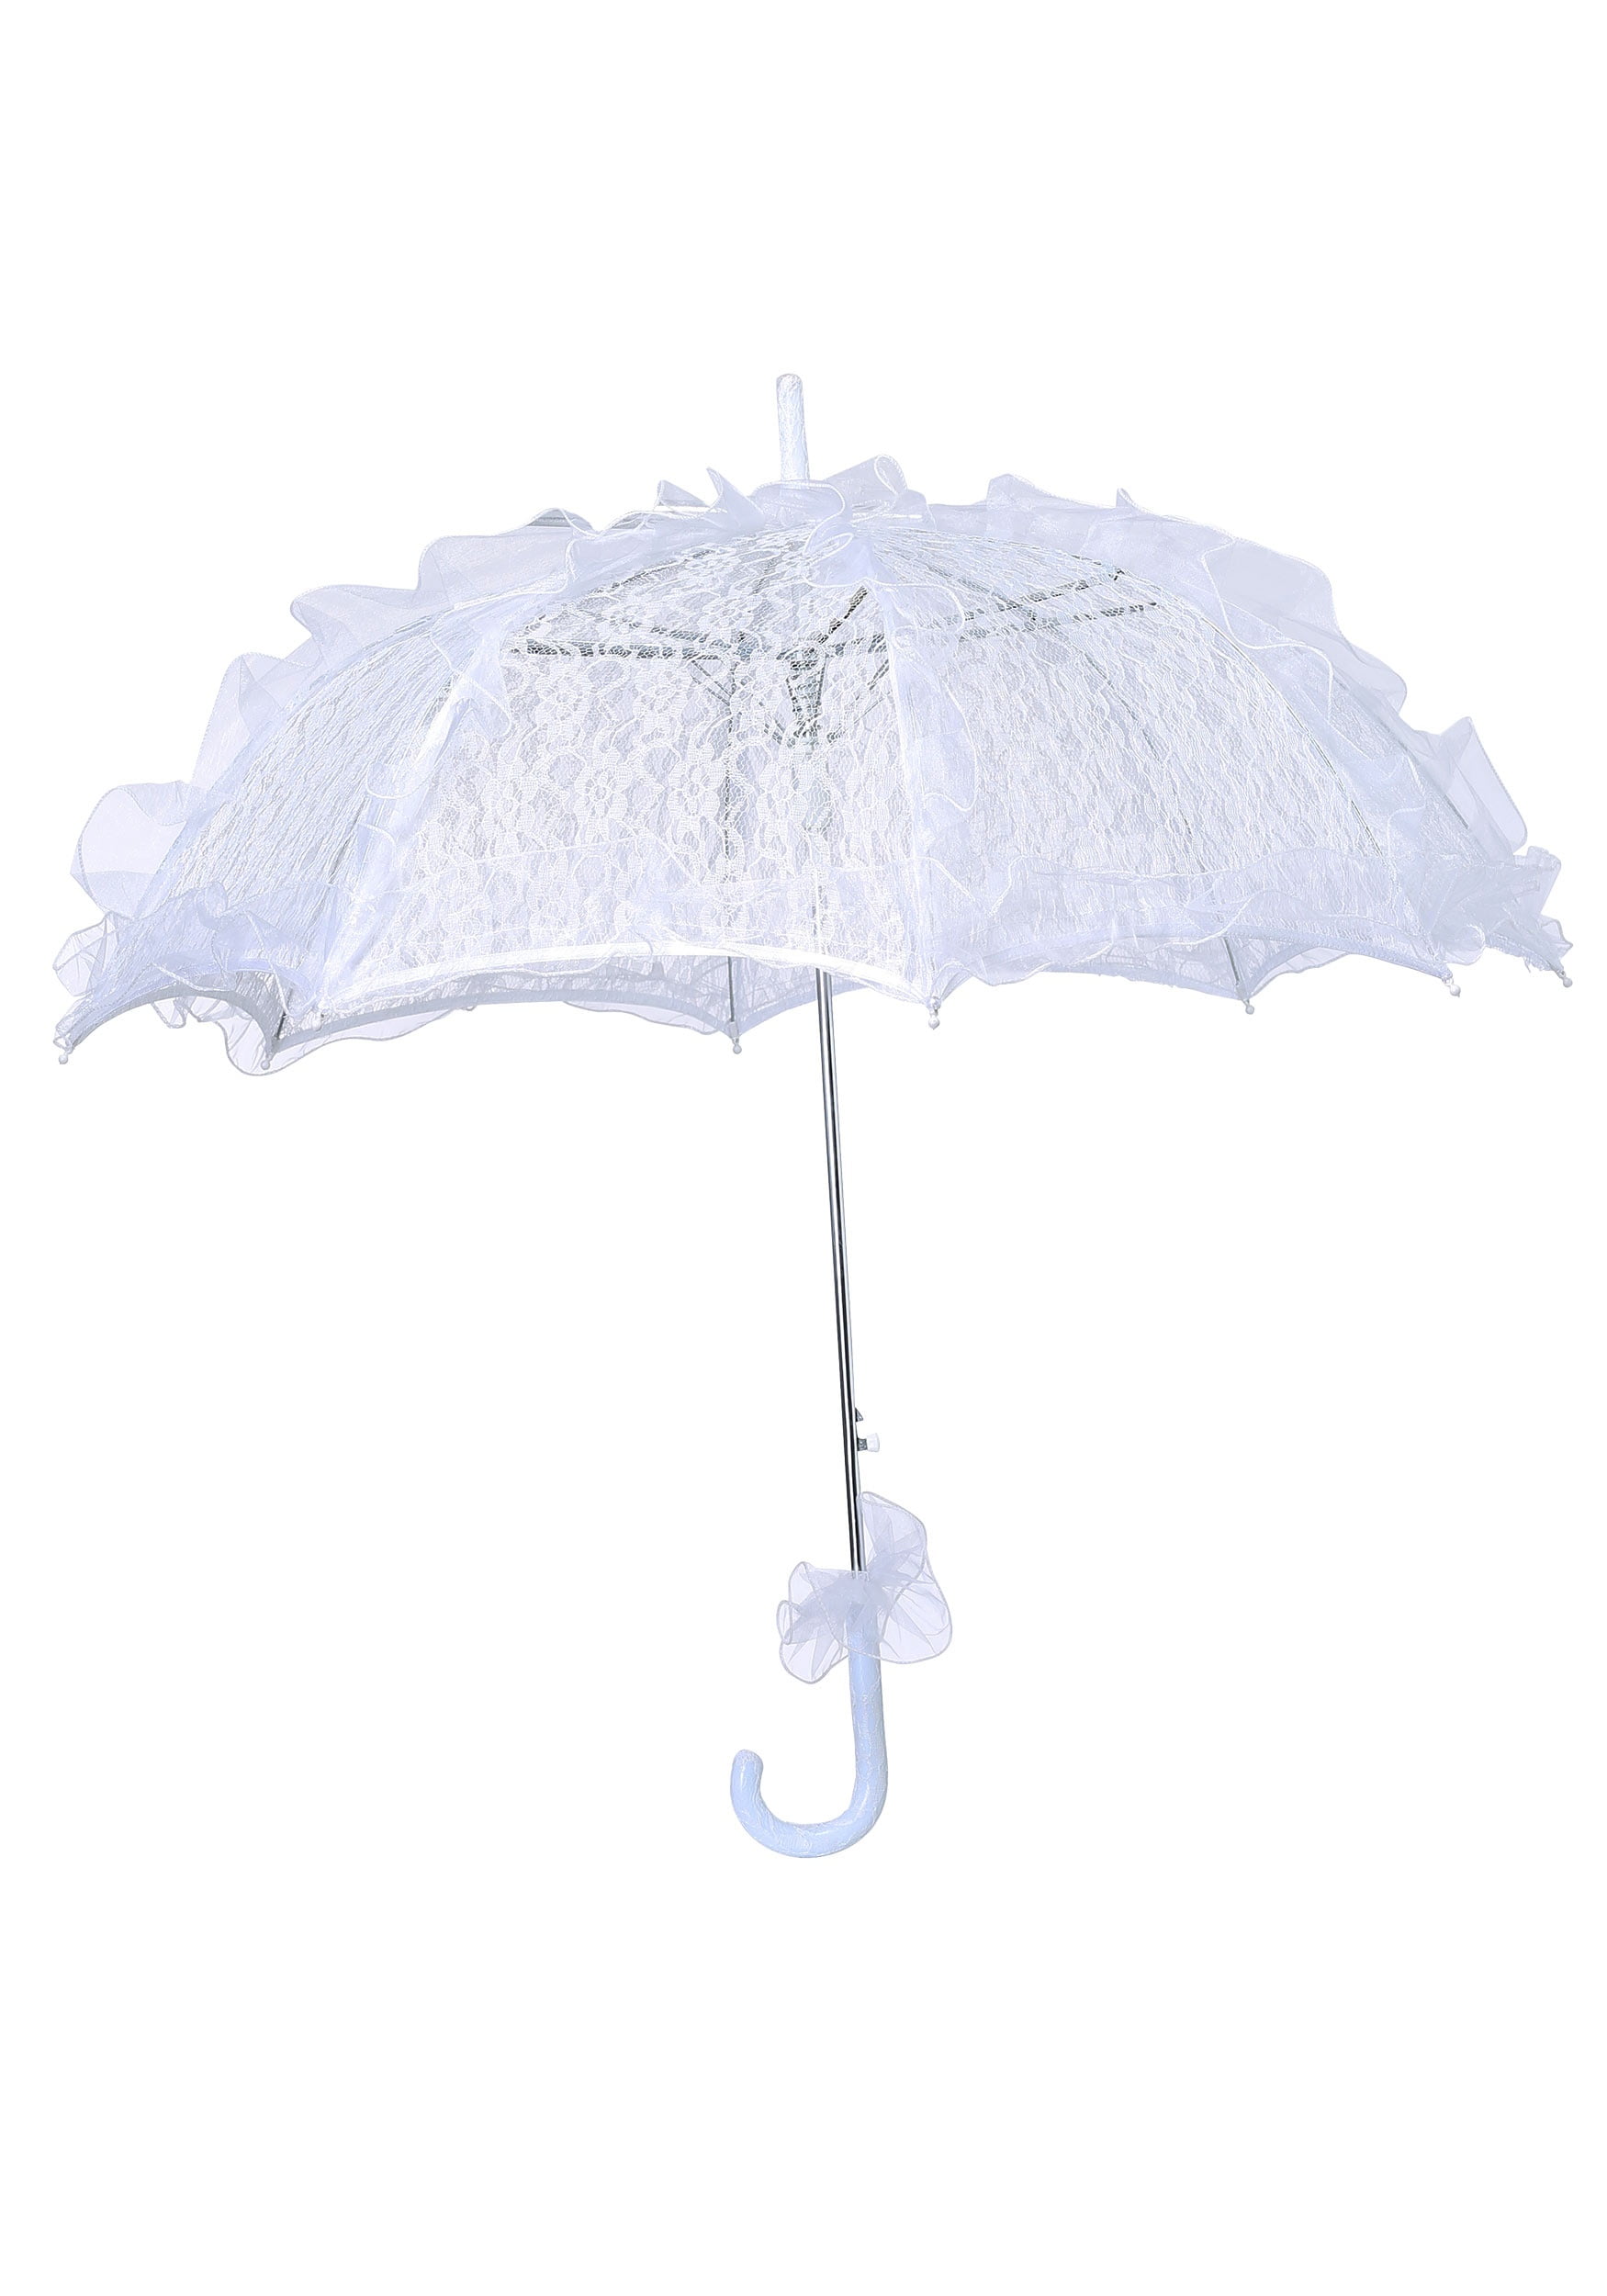 Banquet Lace Umbrella Umbrella Umbrella Overstep Ivory Sunscreen Parasol Cotton Lace Craft Xi Palace Ms